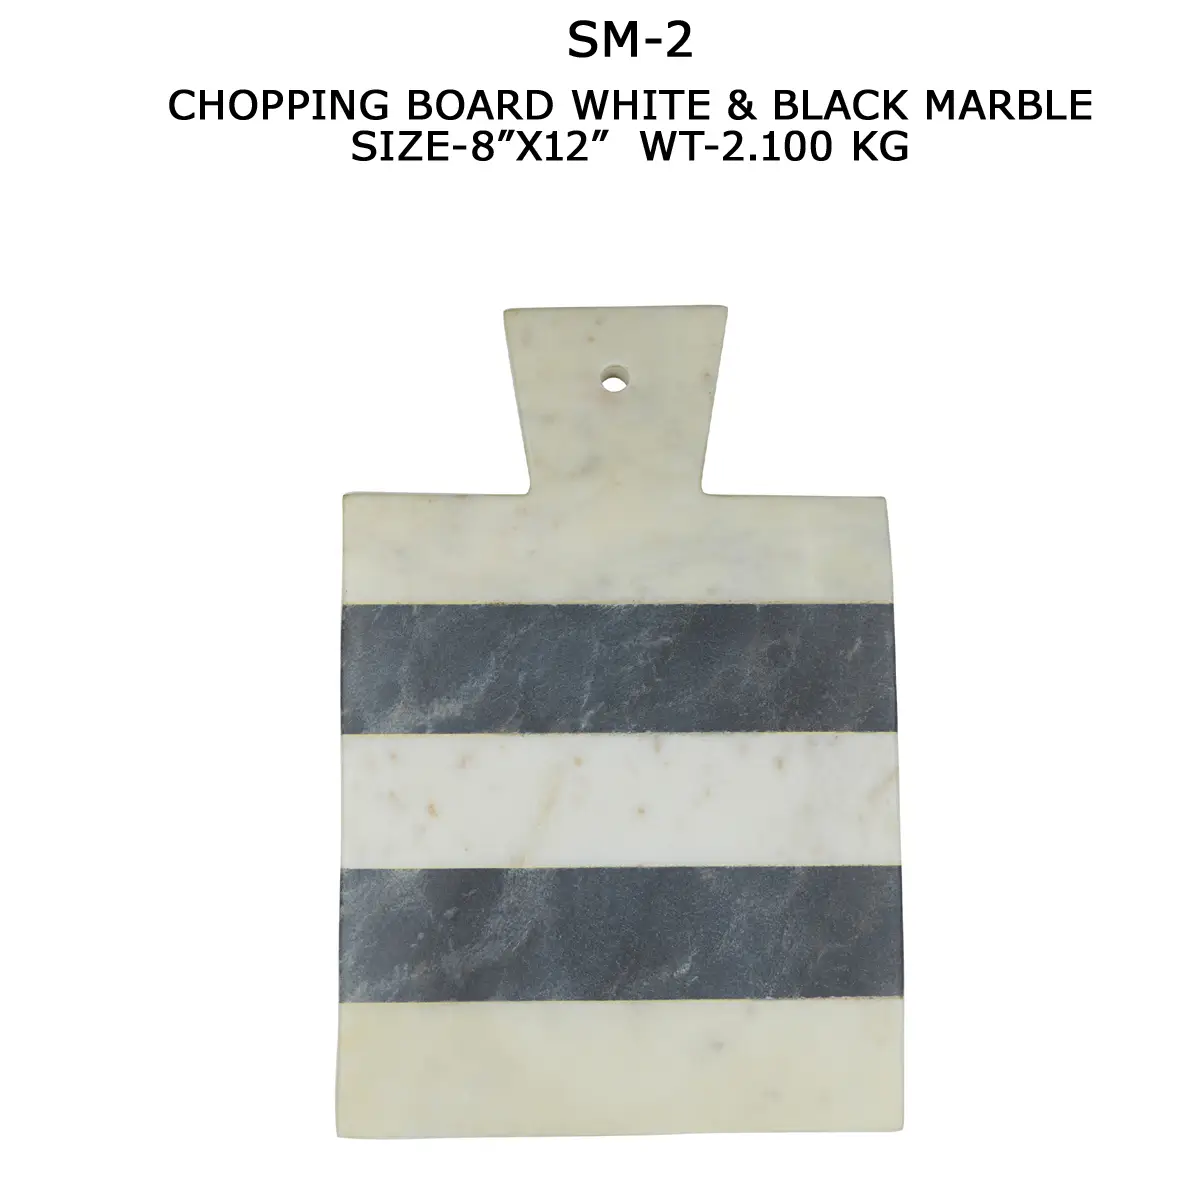 CHOPPING BOARD WHITE & BLACK MARBLE